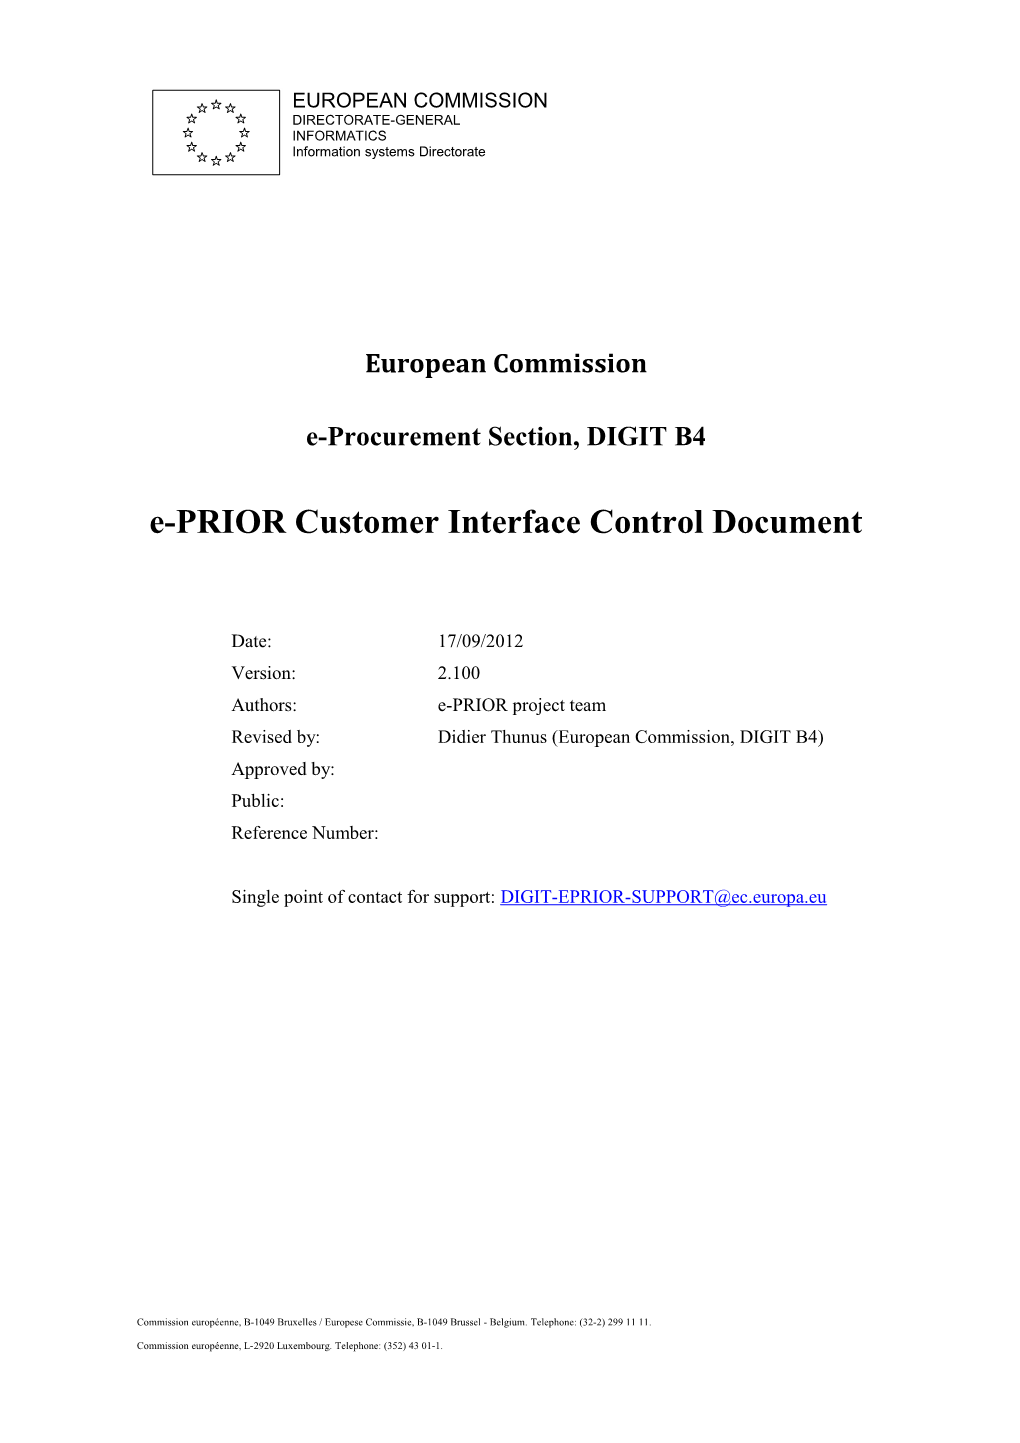 Customer Interface Control Document